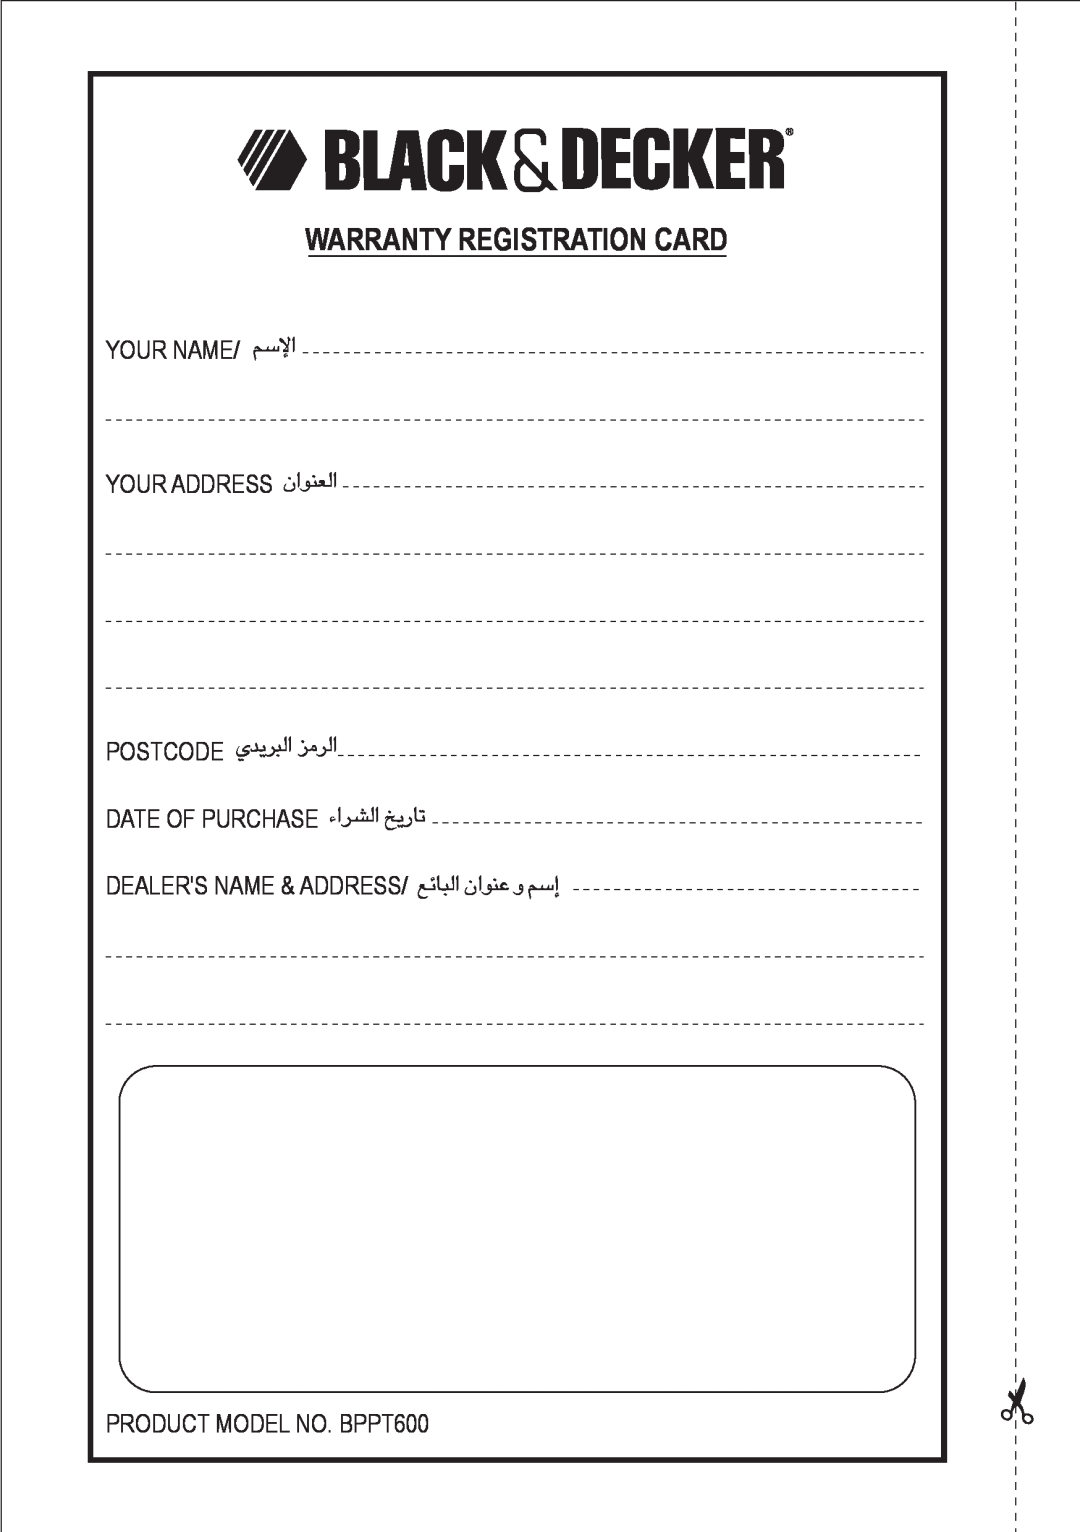 Black & Decker BPPT600 manual Warranty Registration Card, «ùßr, «∞FMu«Ê, «∞∂d¥bÍ «∞d±e, «∞Ad«¡ ¢U¸¥a, «∞∂Uzl ´Mu«Ê Ë ≈ßr 